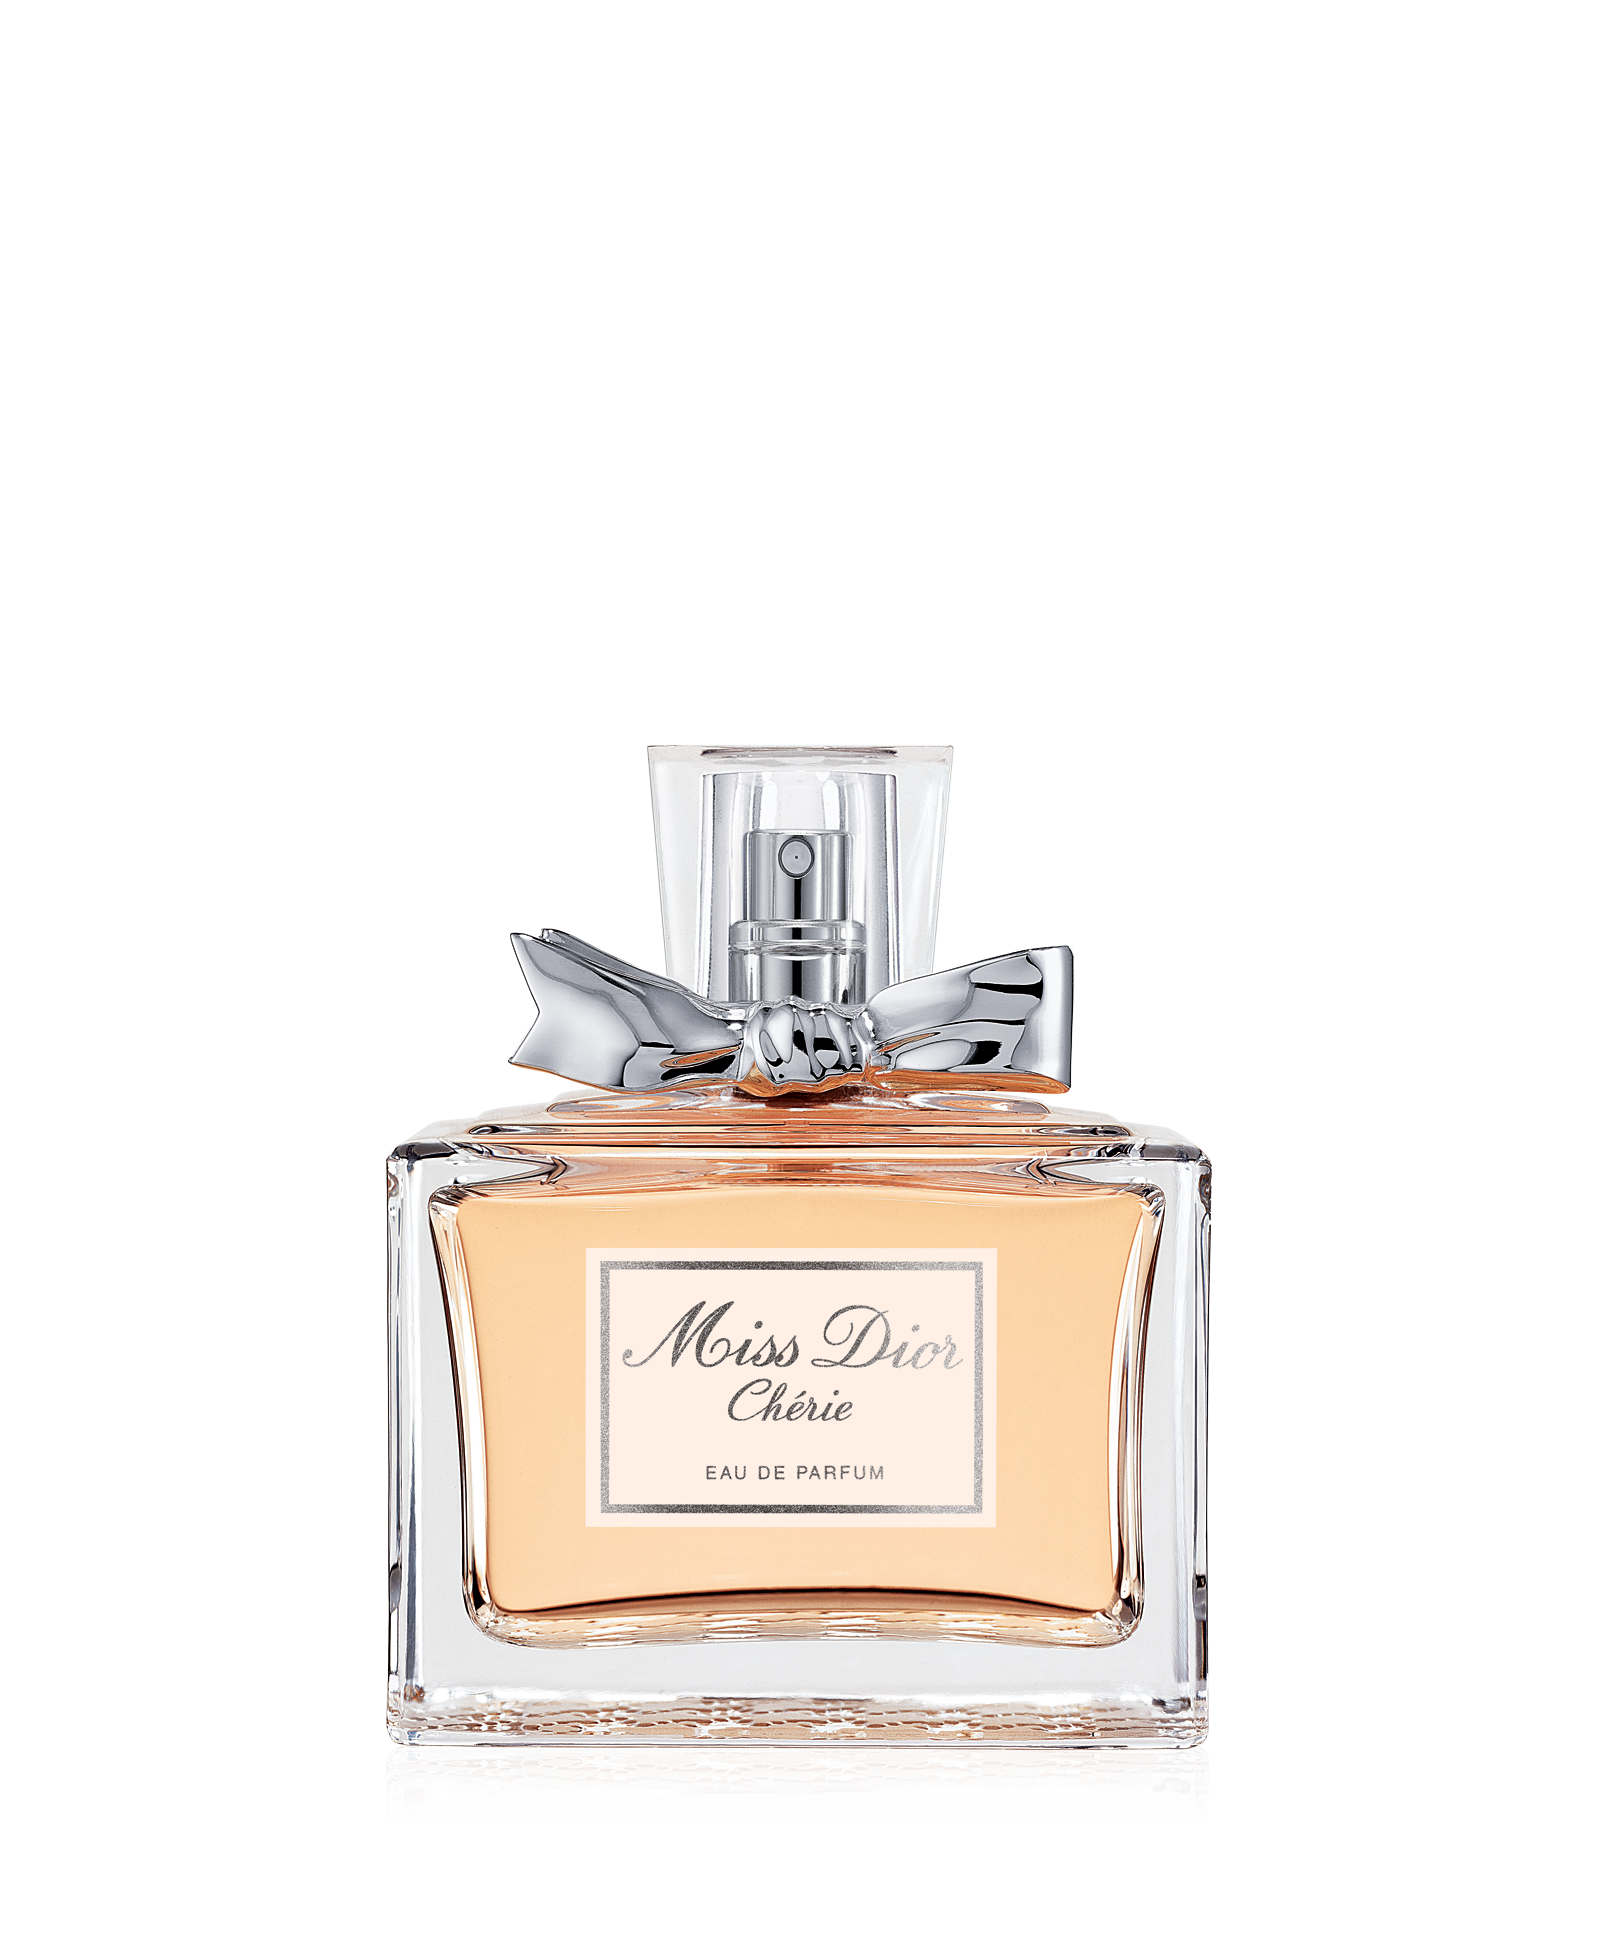 No. Christian Perfume Dior Miss Chanel Se Clipart